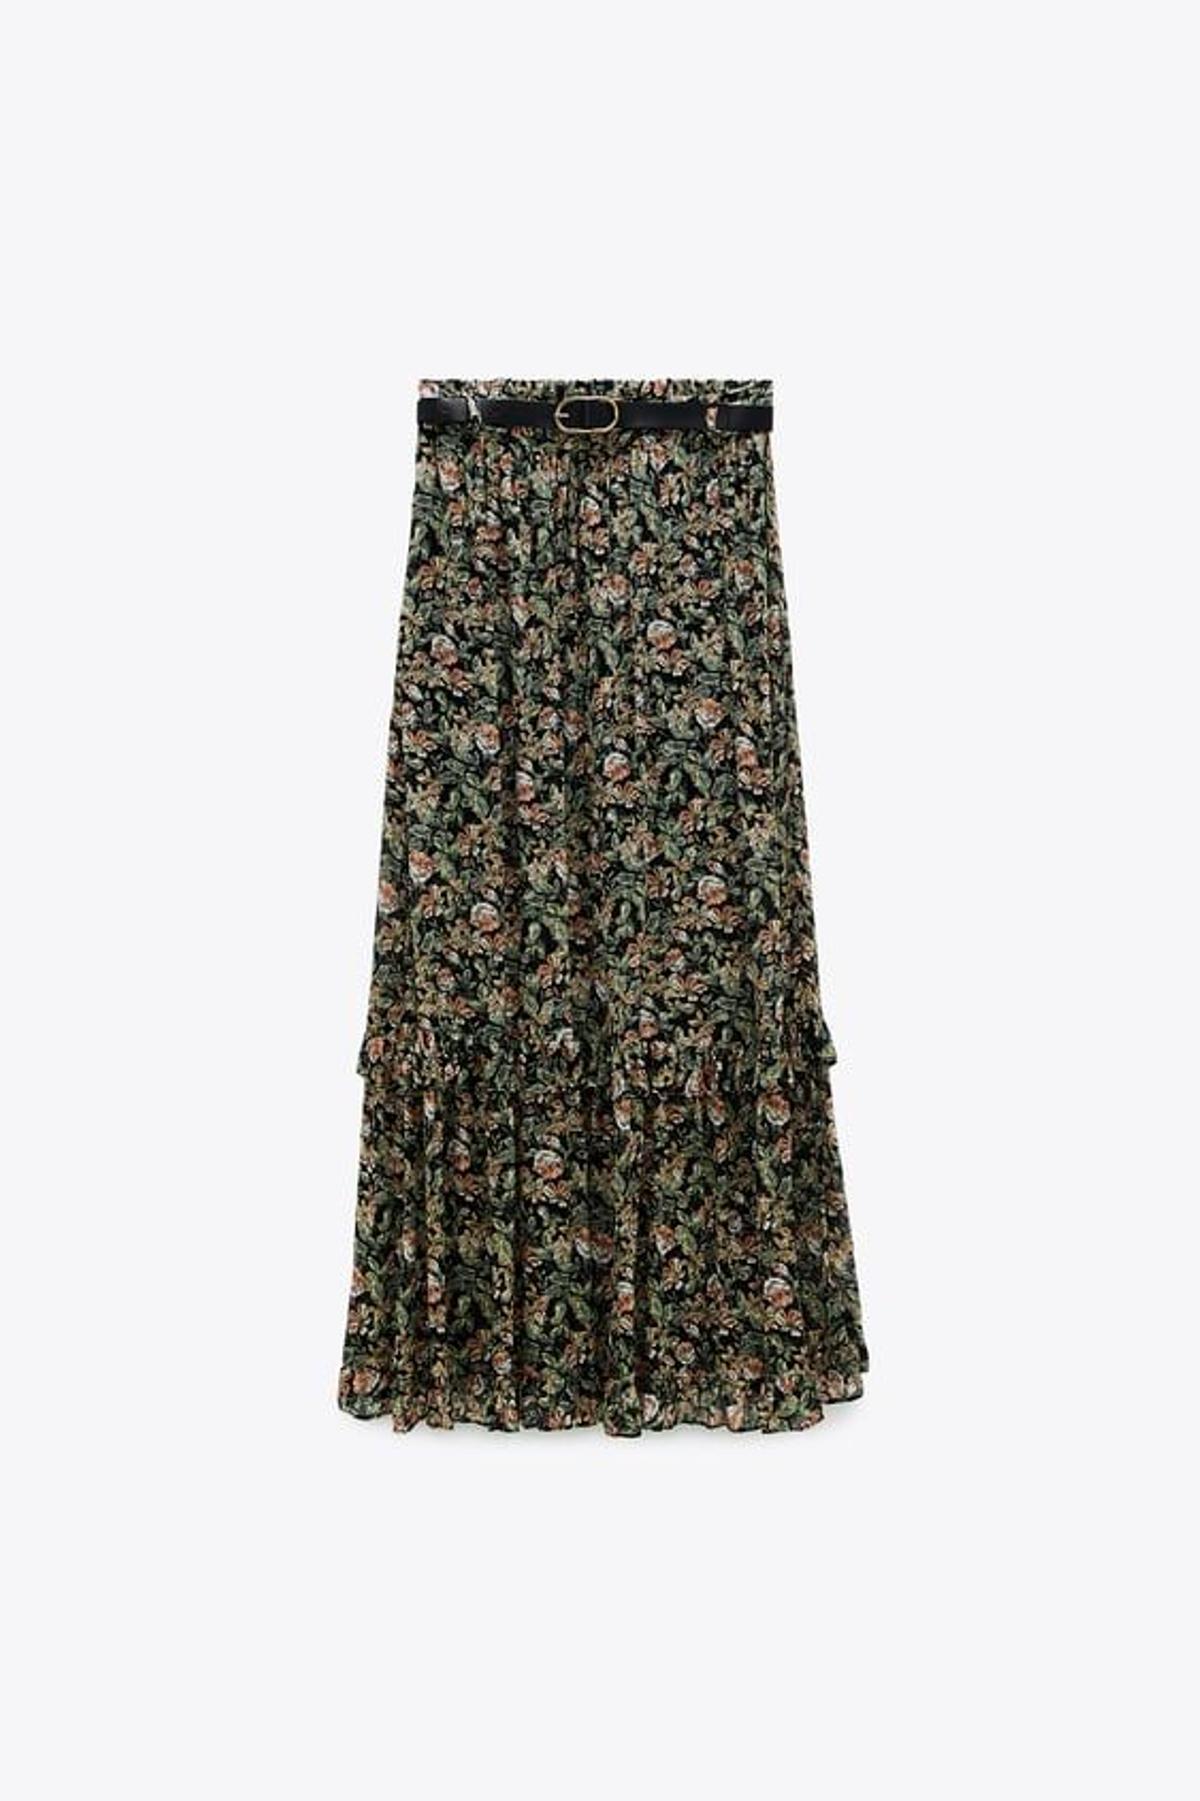 Falda de tiro alto con elástico en espalda, de Zara (25,99 euros)